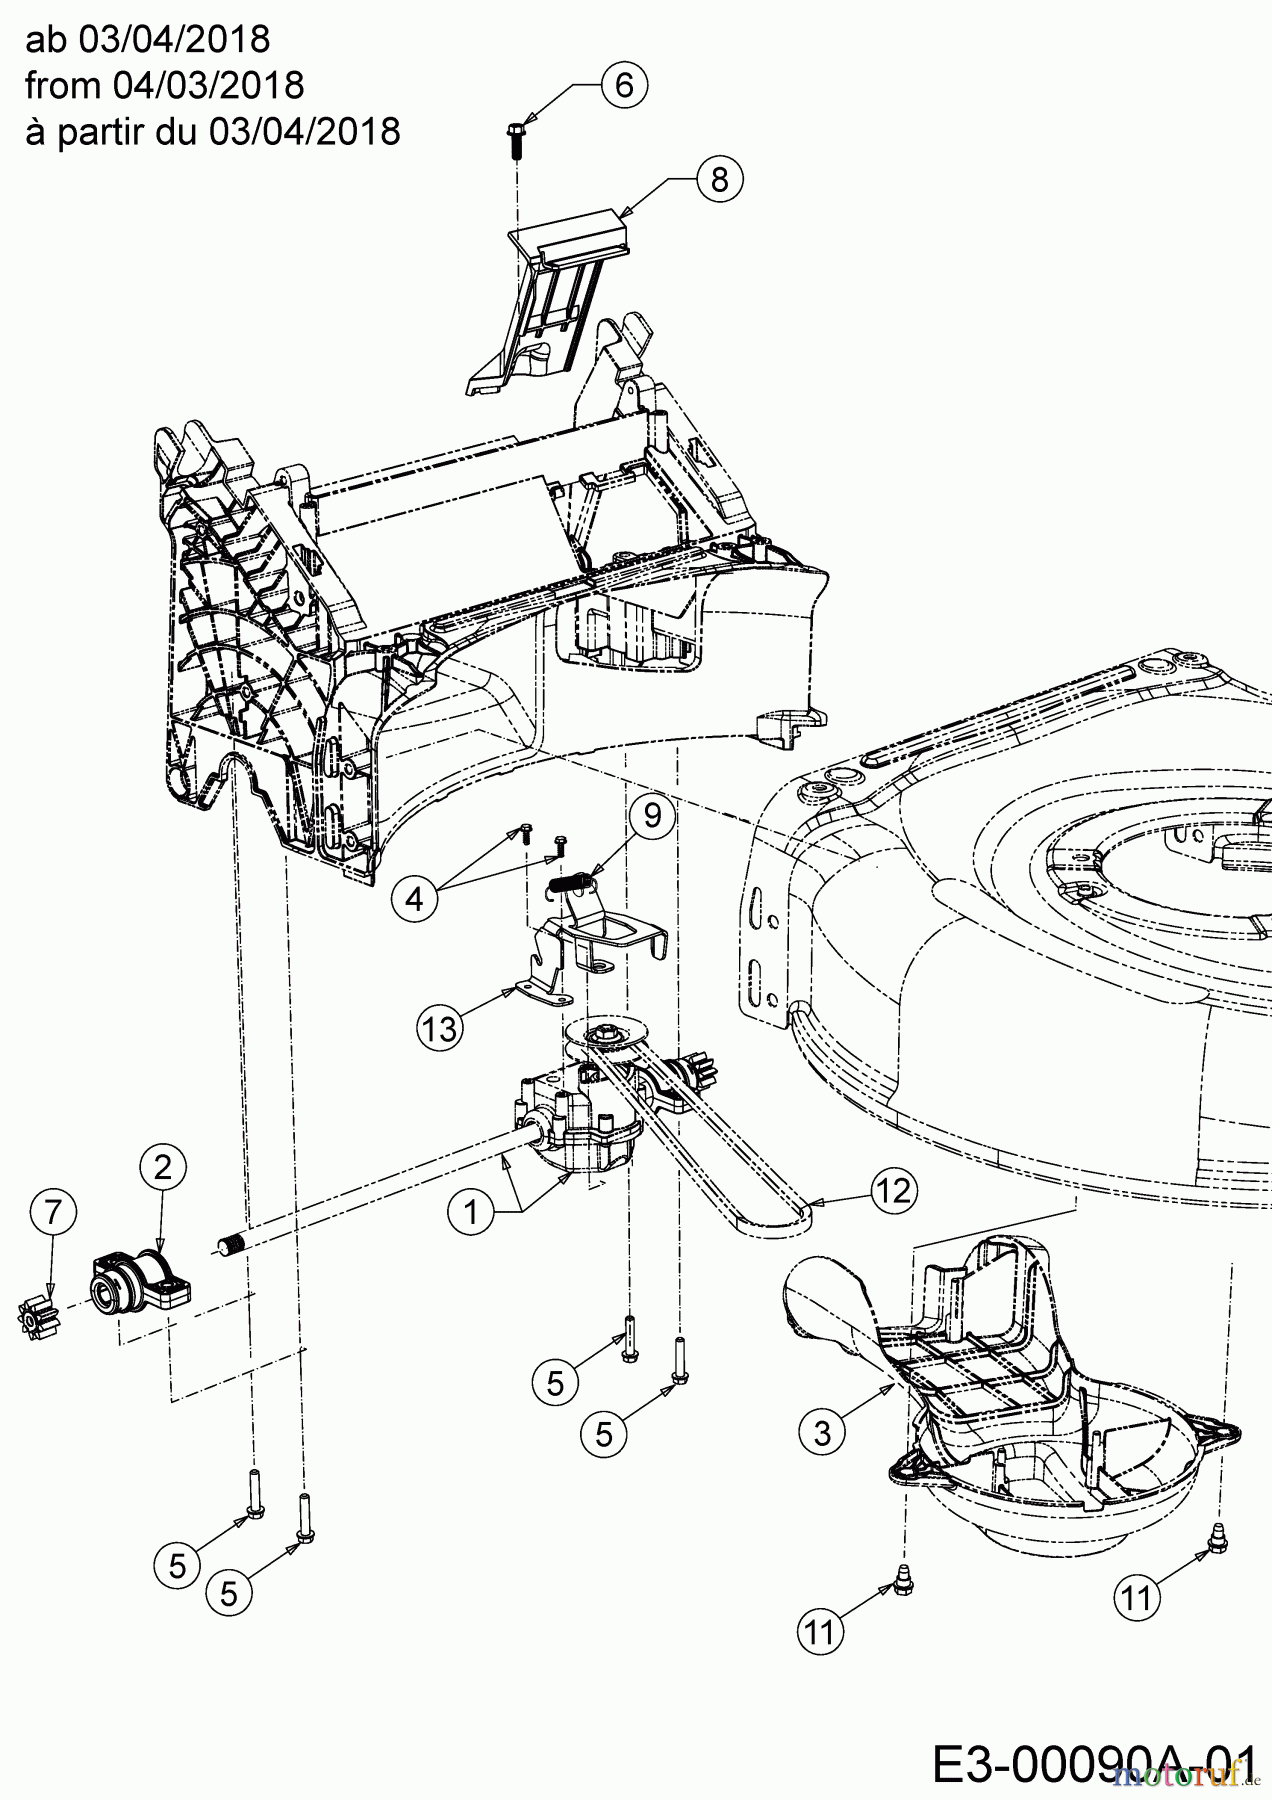  MTD Petrol mower self propelled SP 53 HWBS 12A-PF7B600  (2019) Gearbox, Belt from 04/03/2018